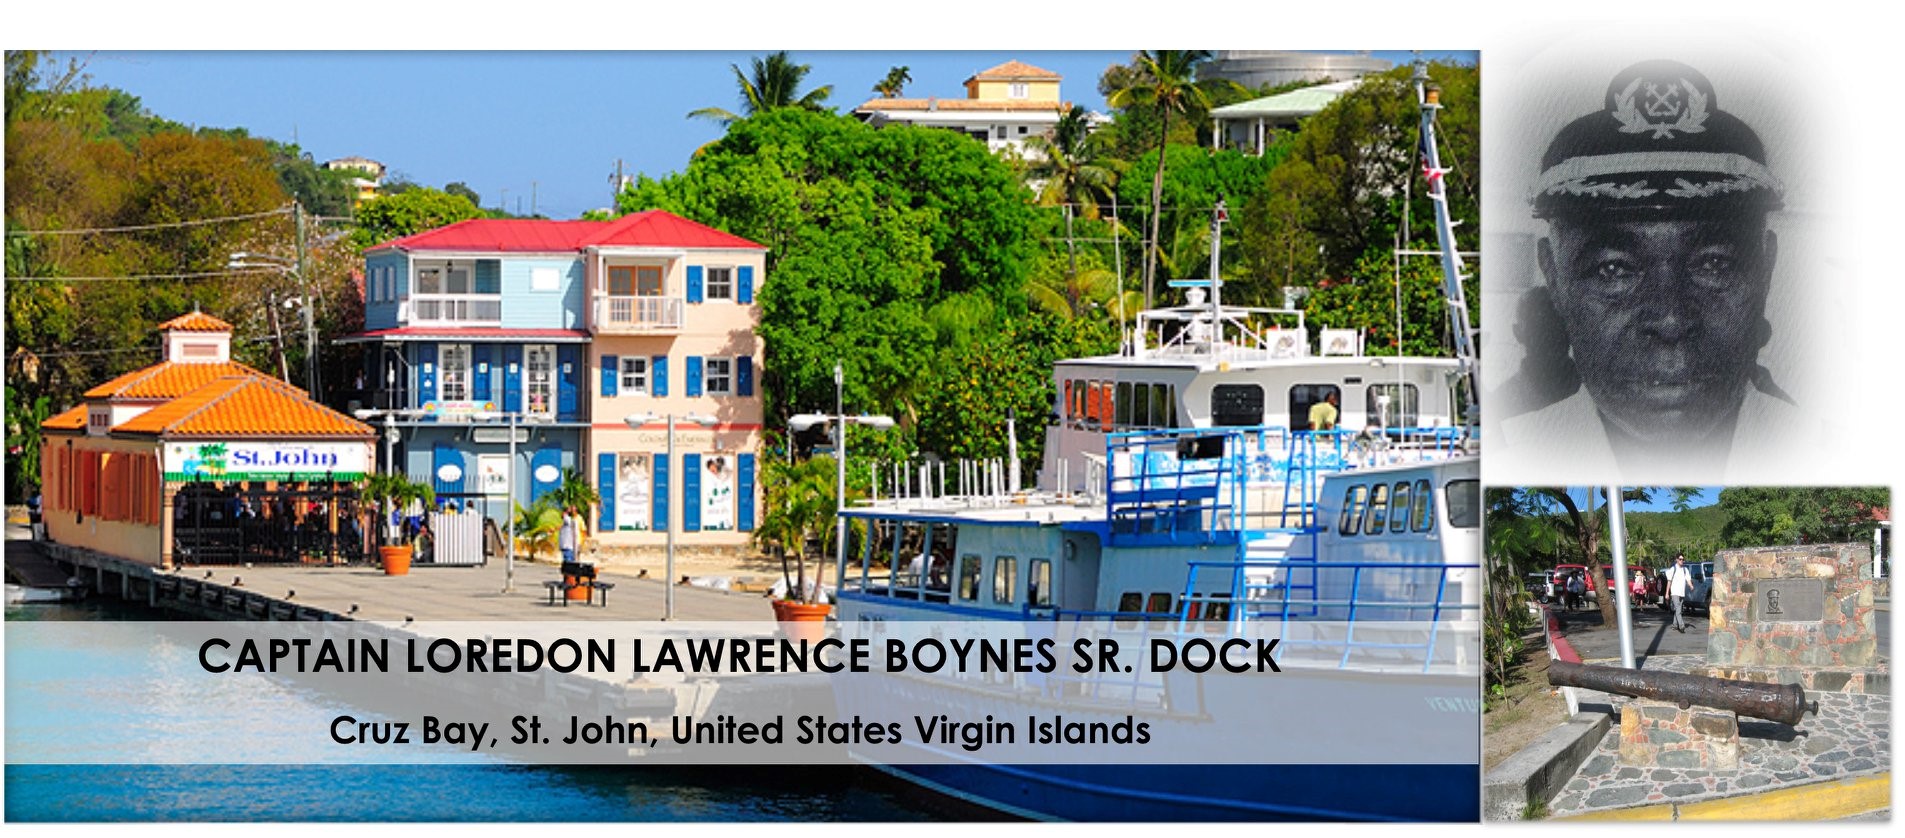 A Brief History of The Loredon L. Boynes Sr. Dock In Cruz Bay, St. John: VIPA